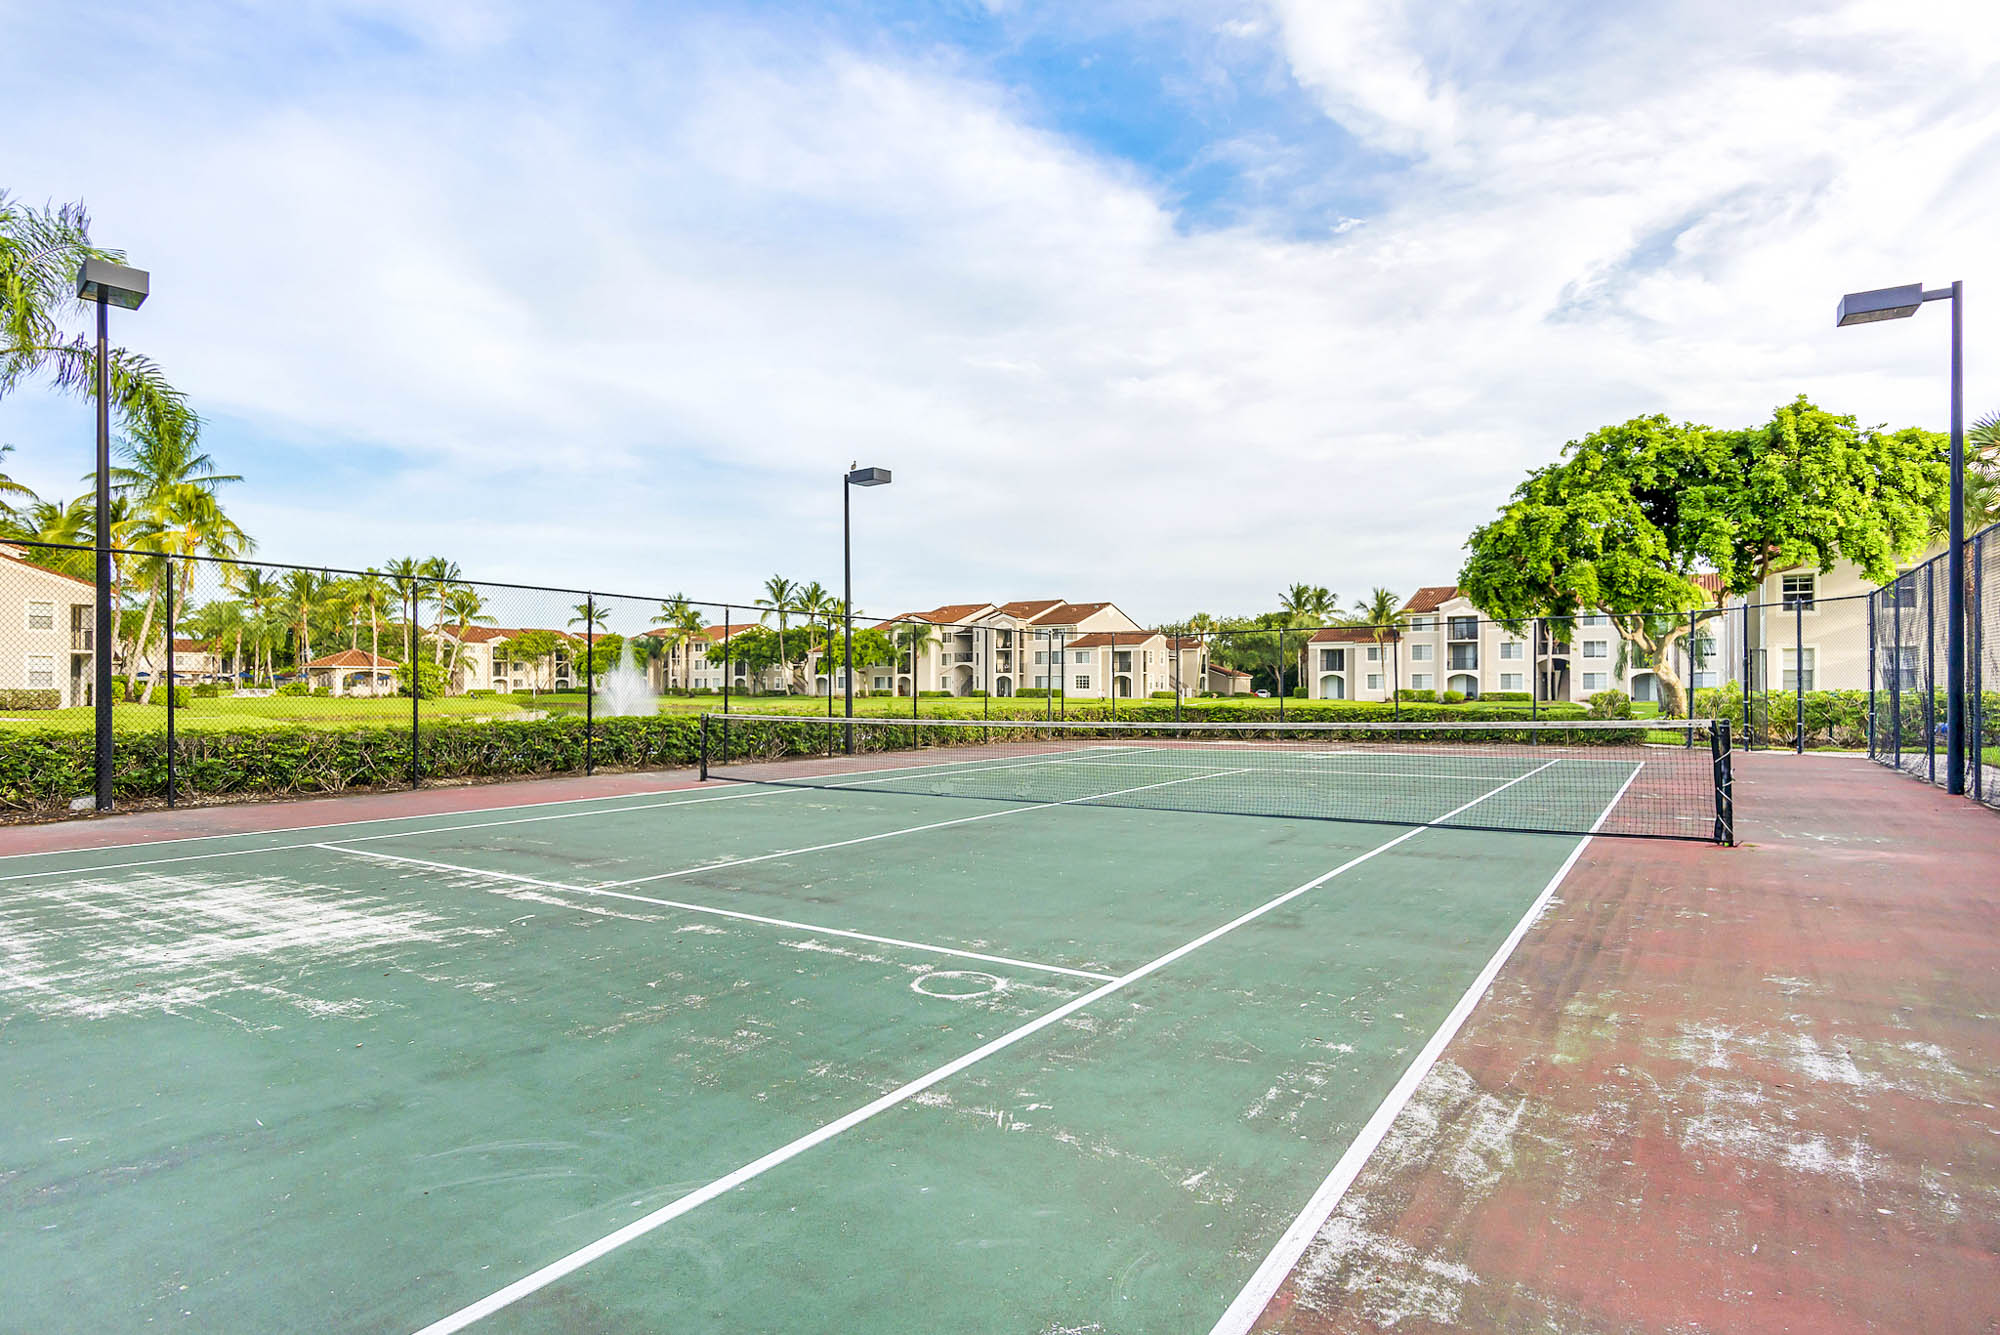 The tennis court at Miramar Lake in Fort Lauderdale, FL.